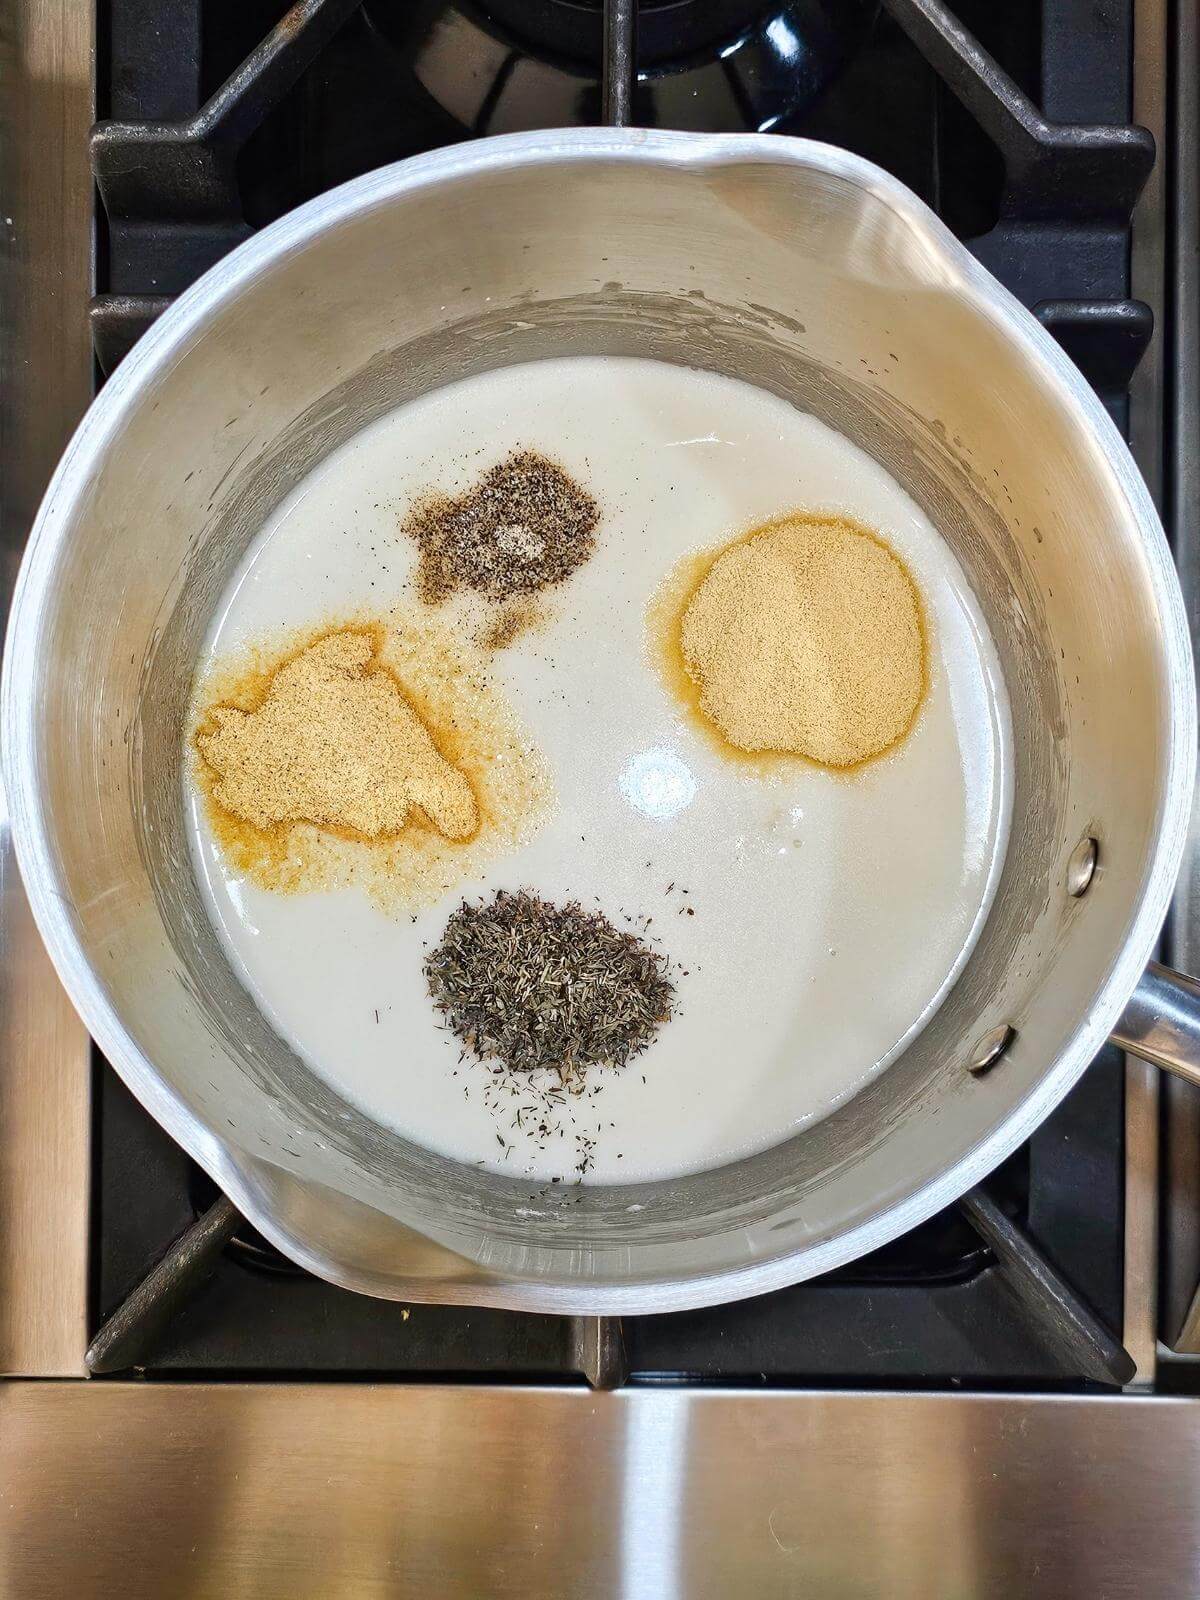 Seasonings and milk mixture in a pot.